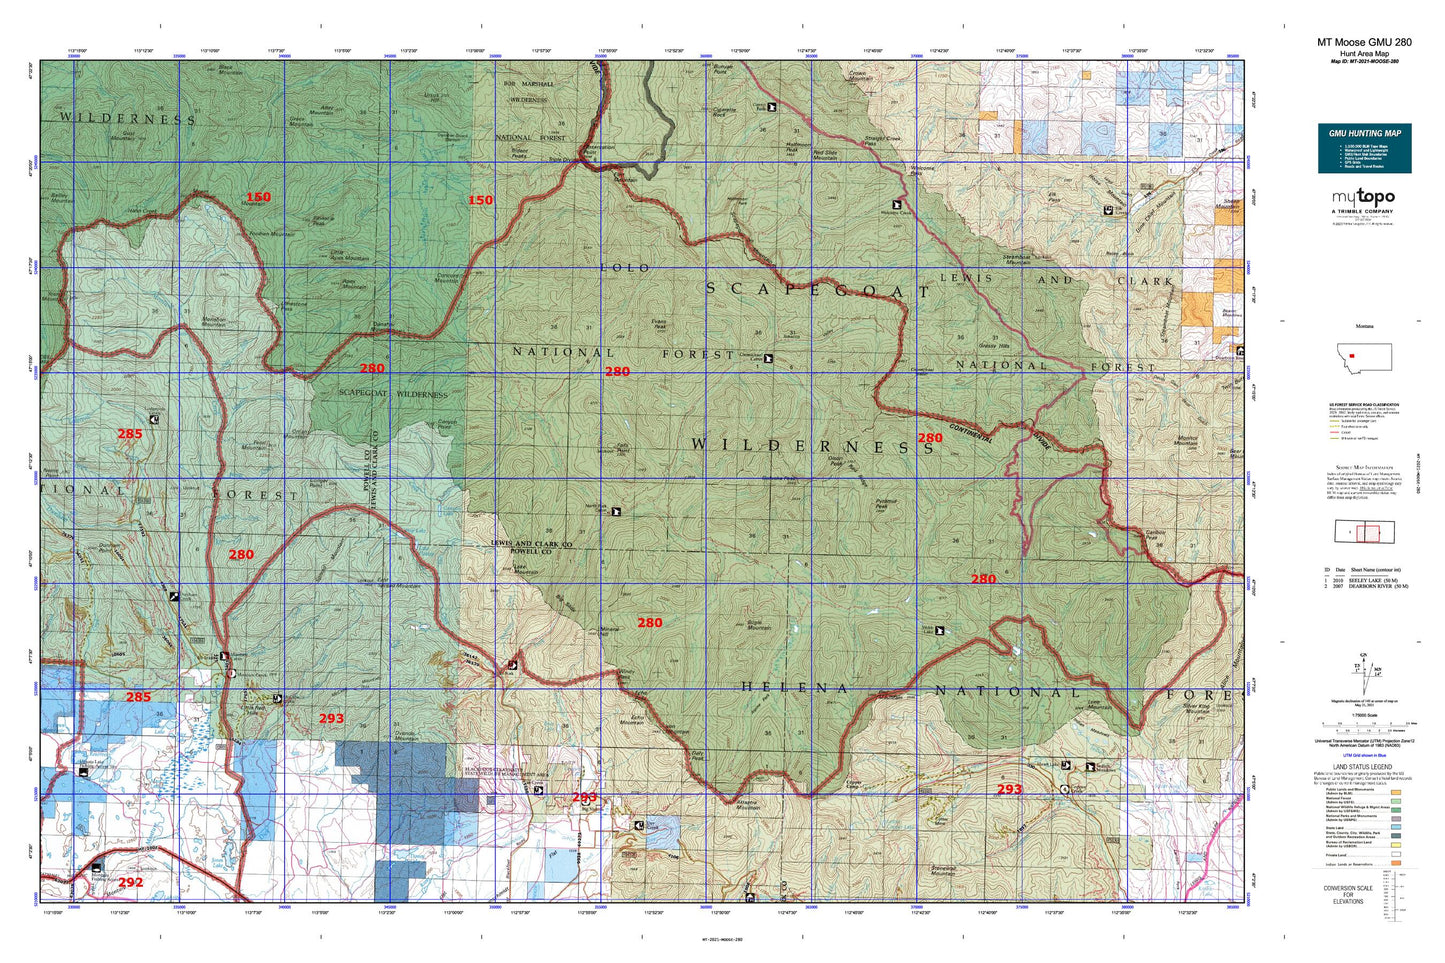 Montana Moose GMU 280 Map Image